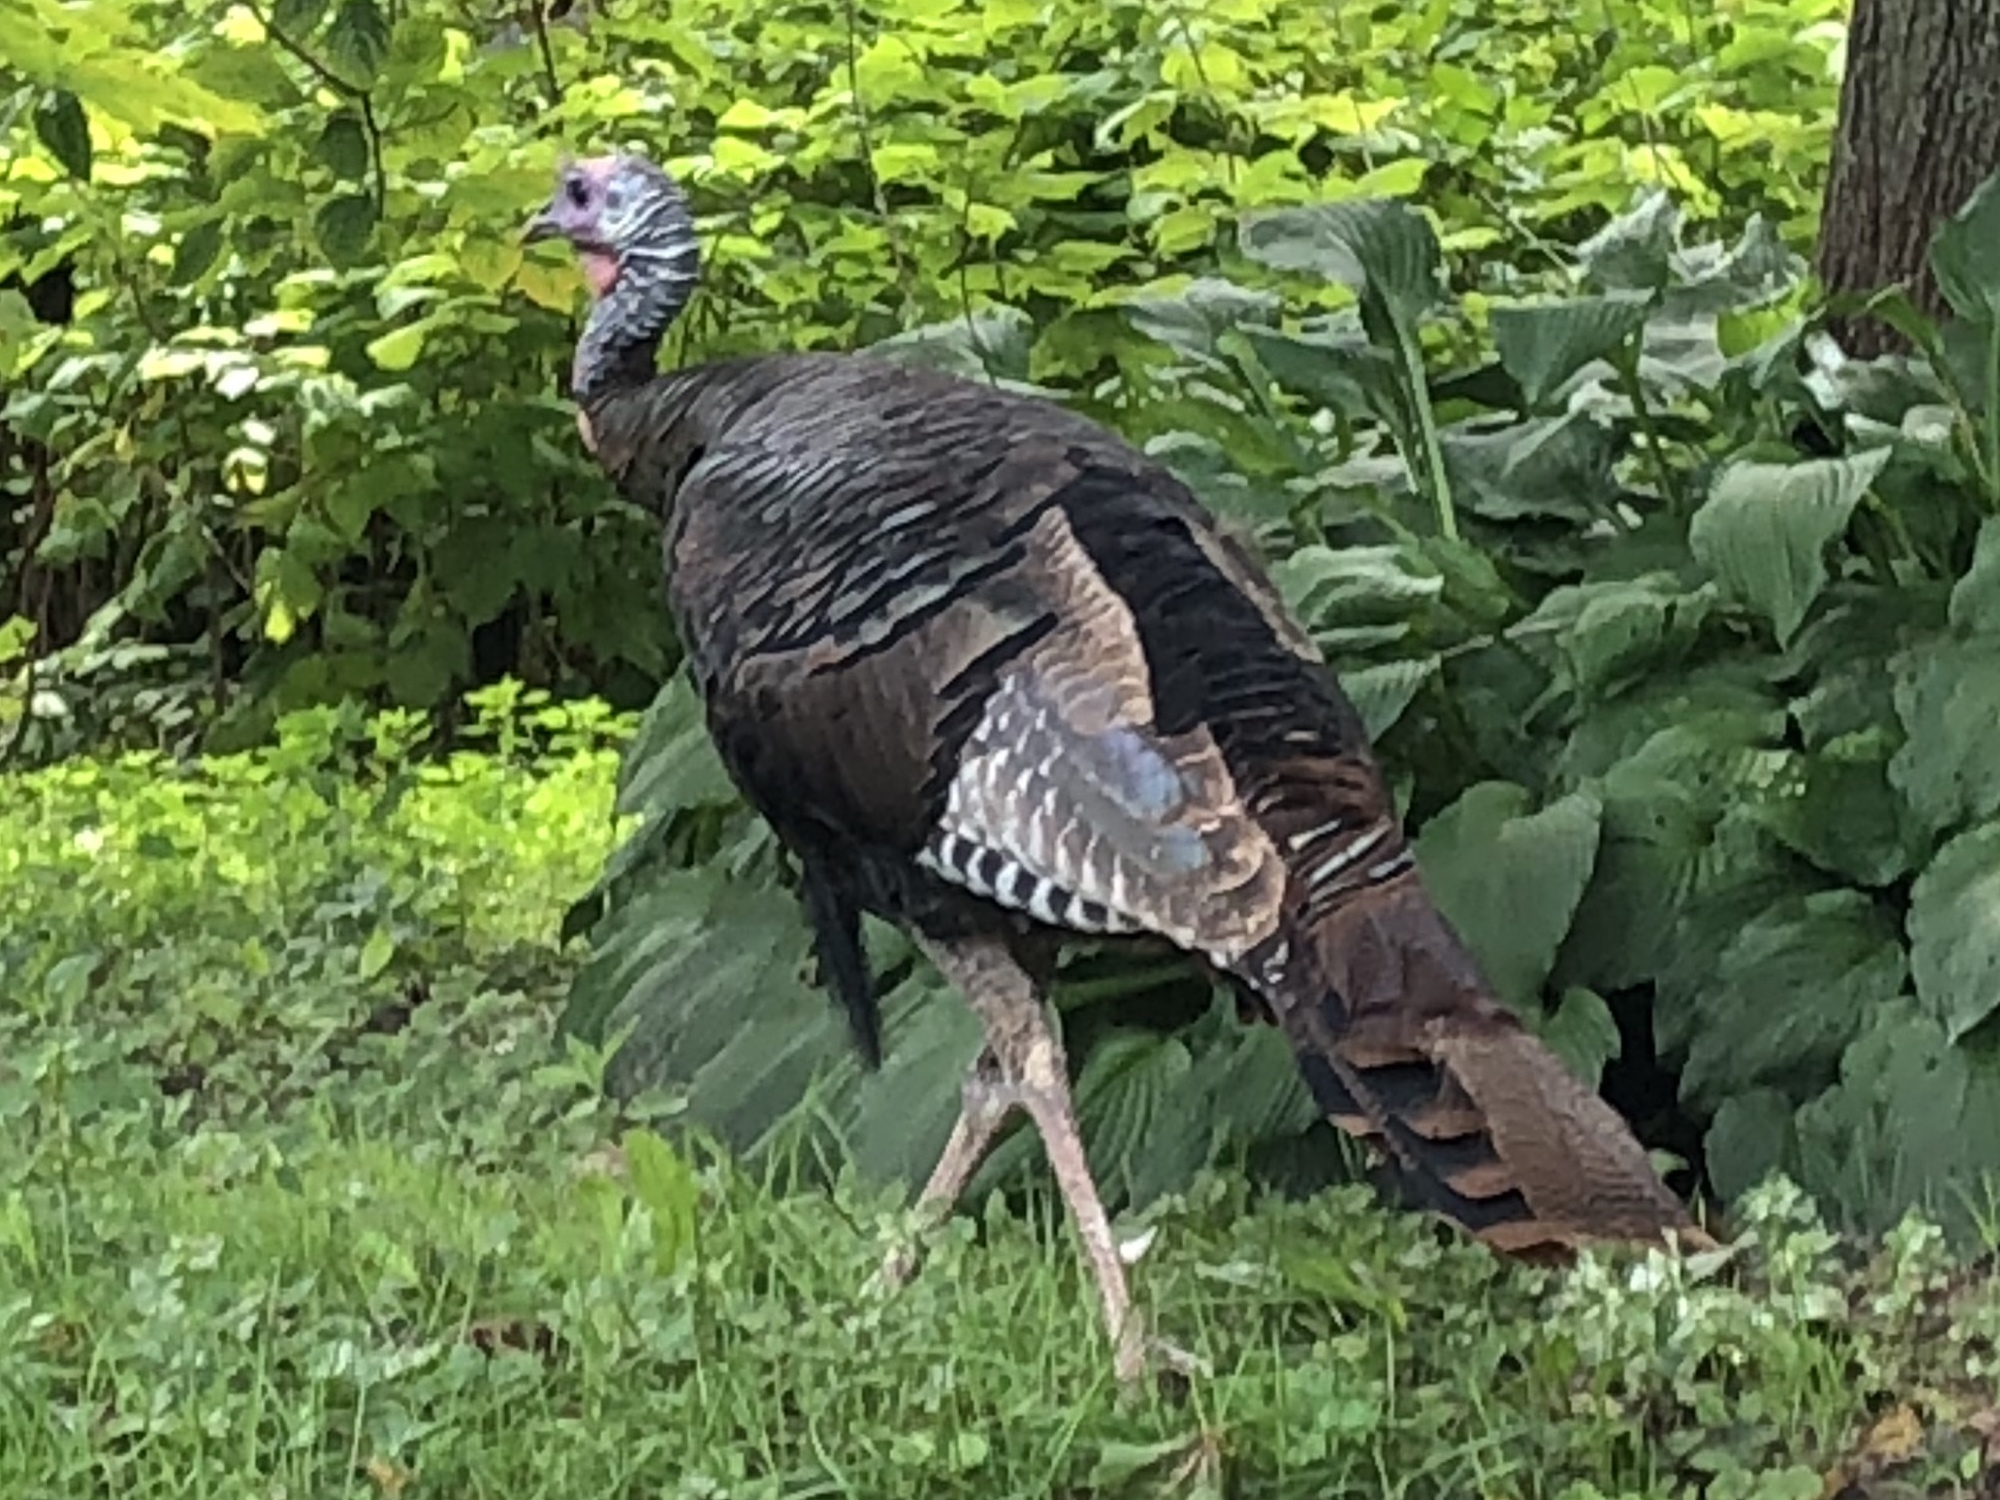 Wild Turkey walking on Gregory Street in Madison on September 9, 2018.